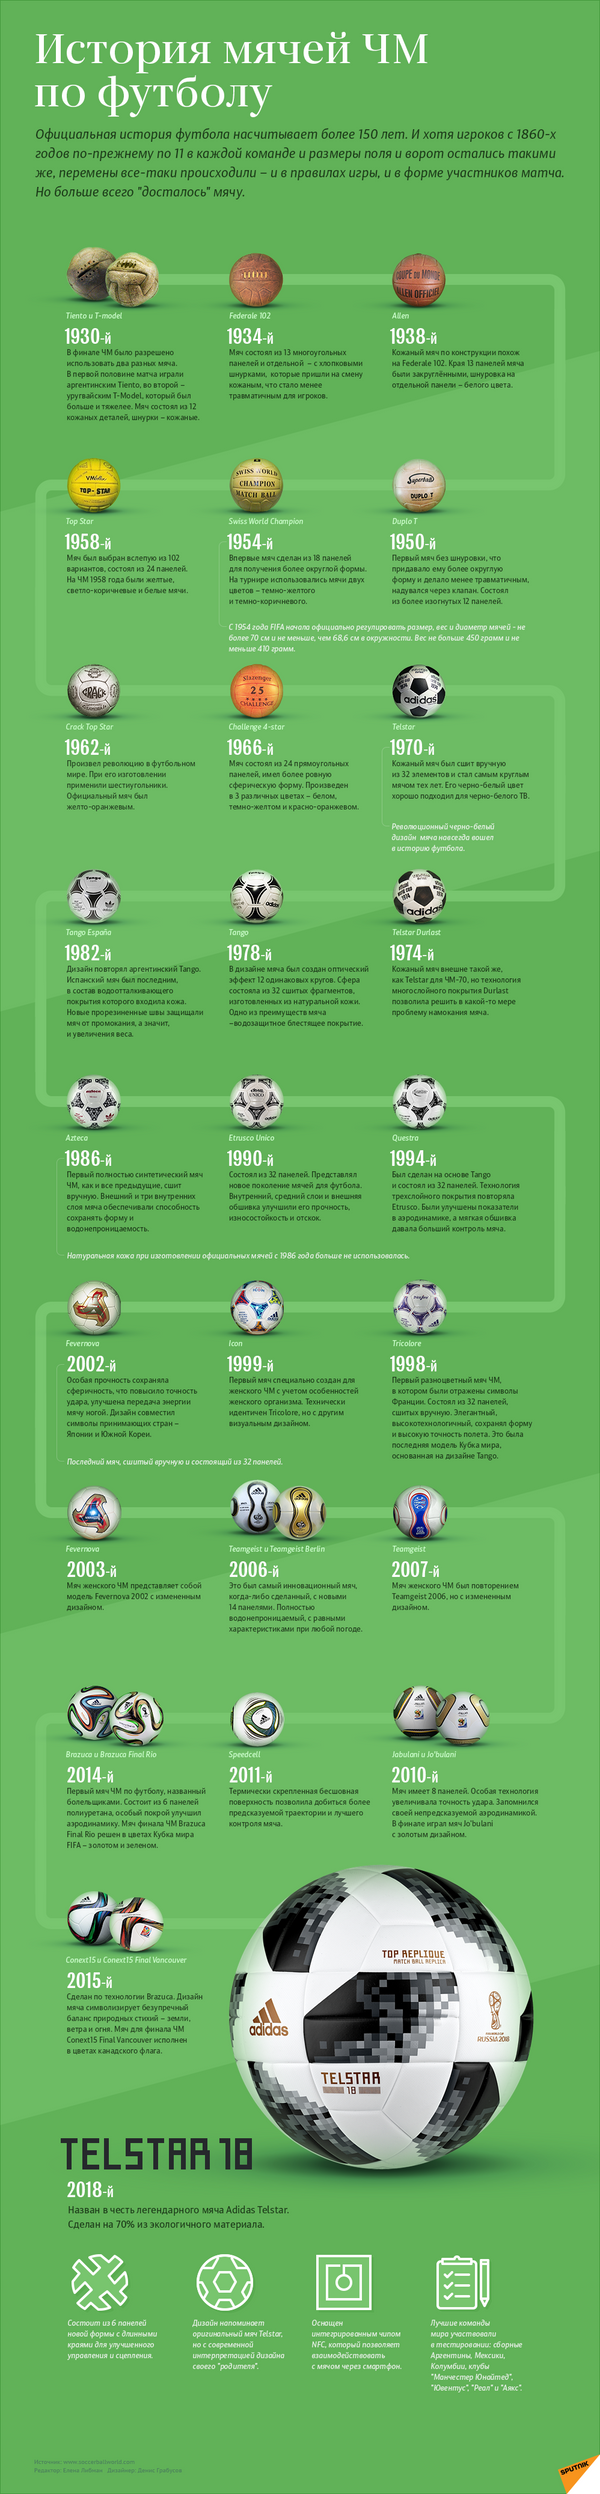 Эволюция мячей ЧМ по футболу – инфографика на sputnik.by - Sputnik Латвия